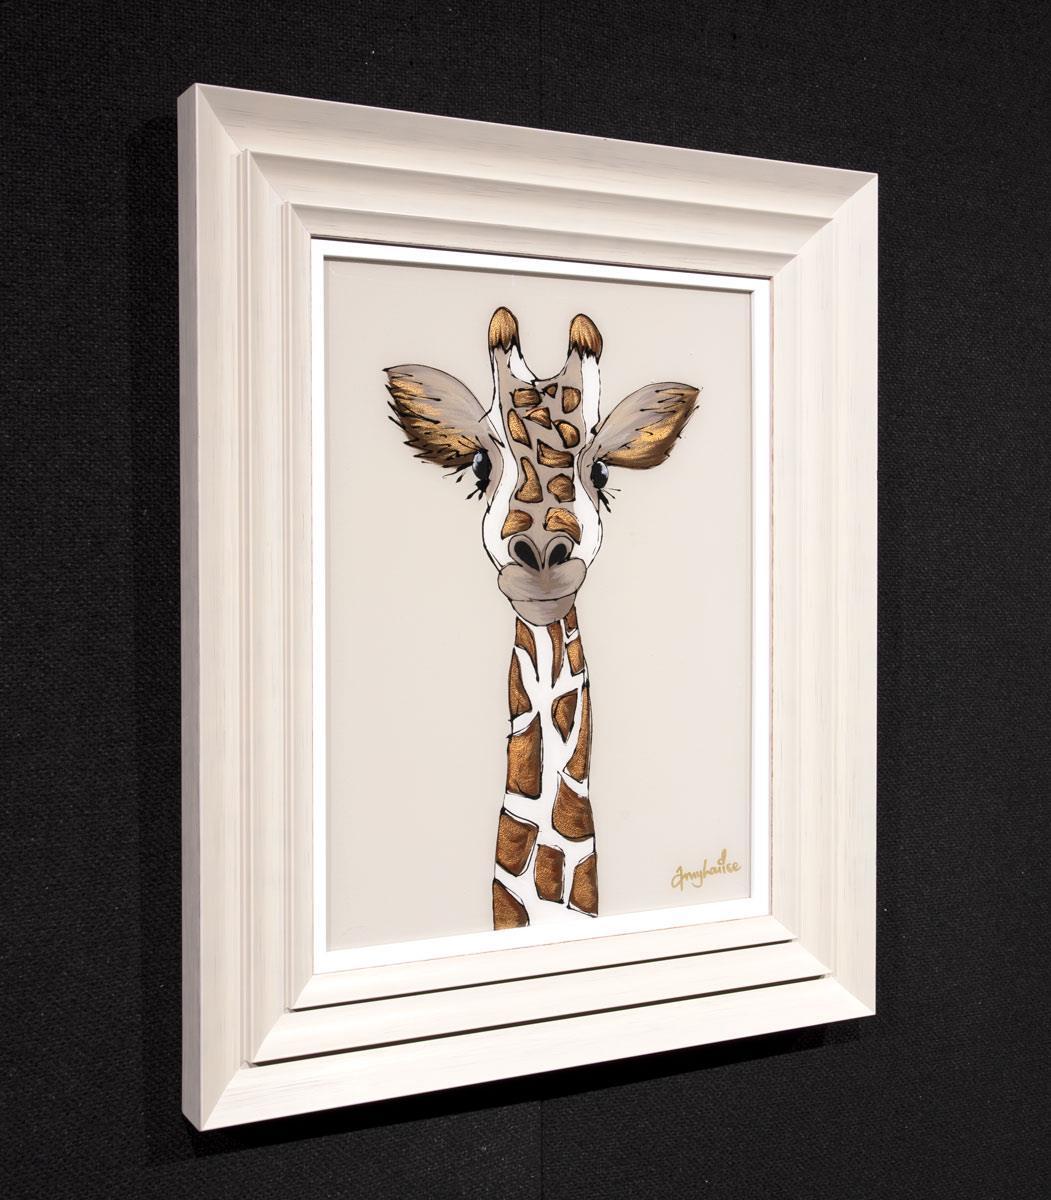 George Giraffe Amy Louise Framed